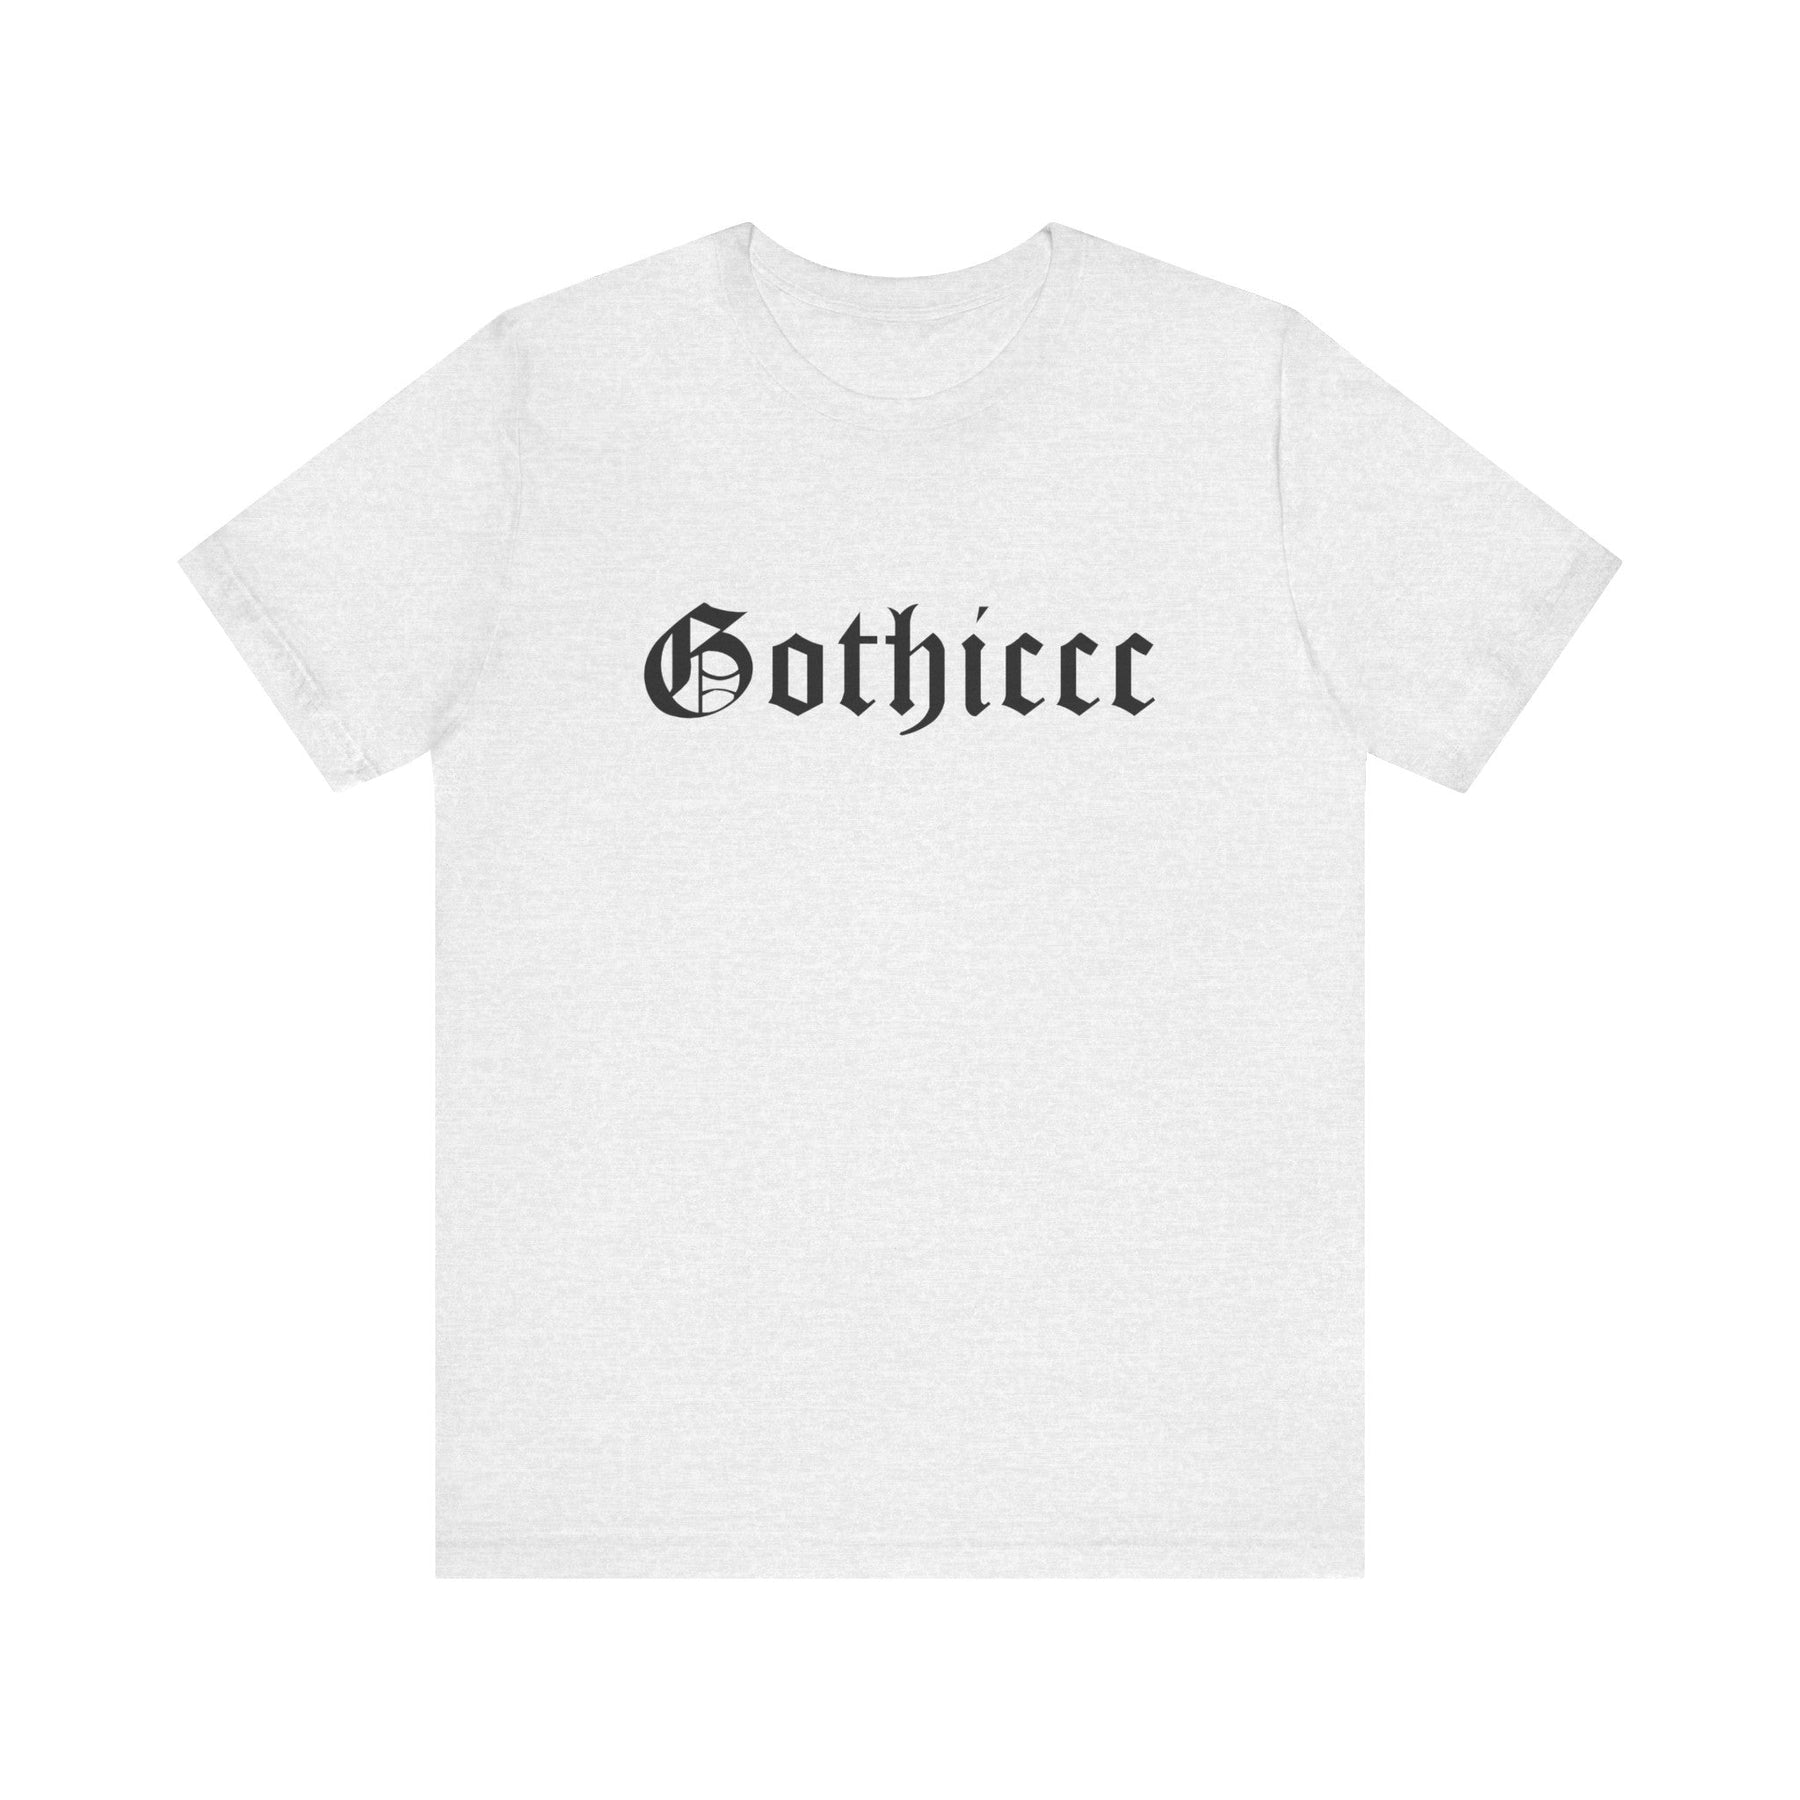 Gothiccc Large Font T - Shirt - Goth Cloth Co.T - Shirt70574656531032873355